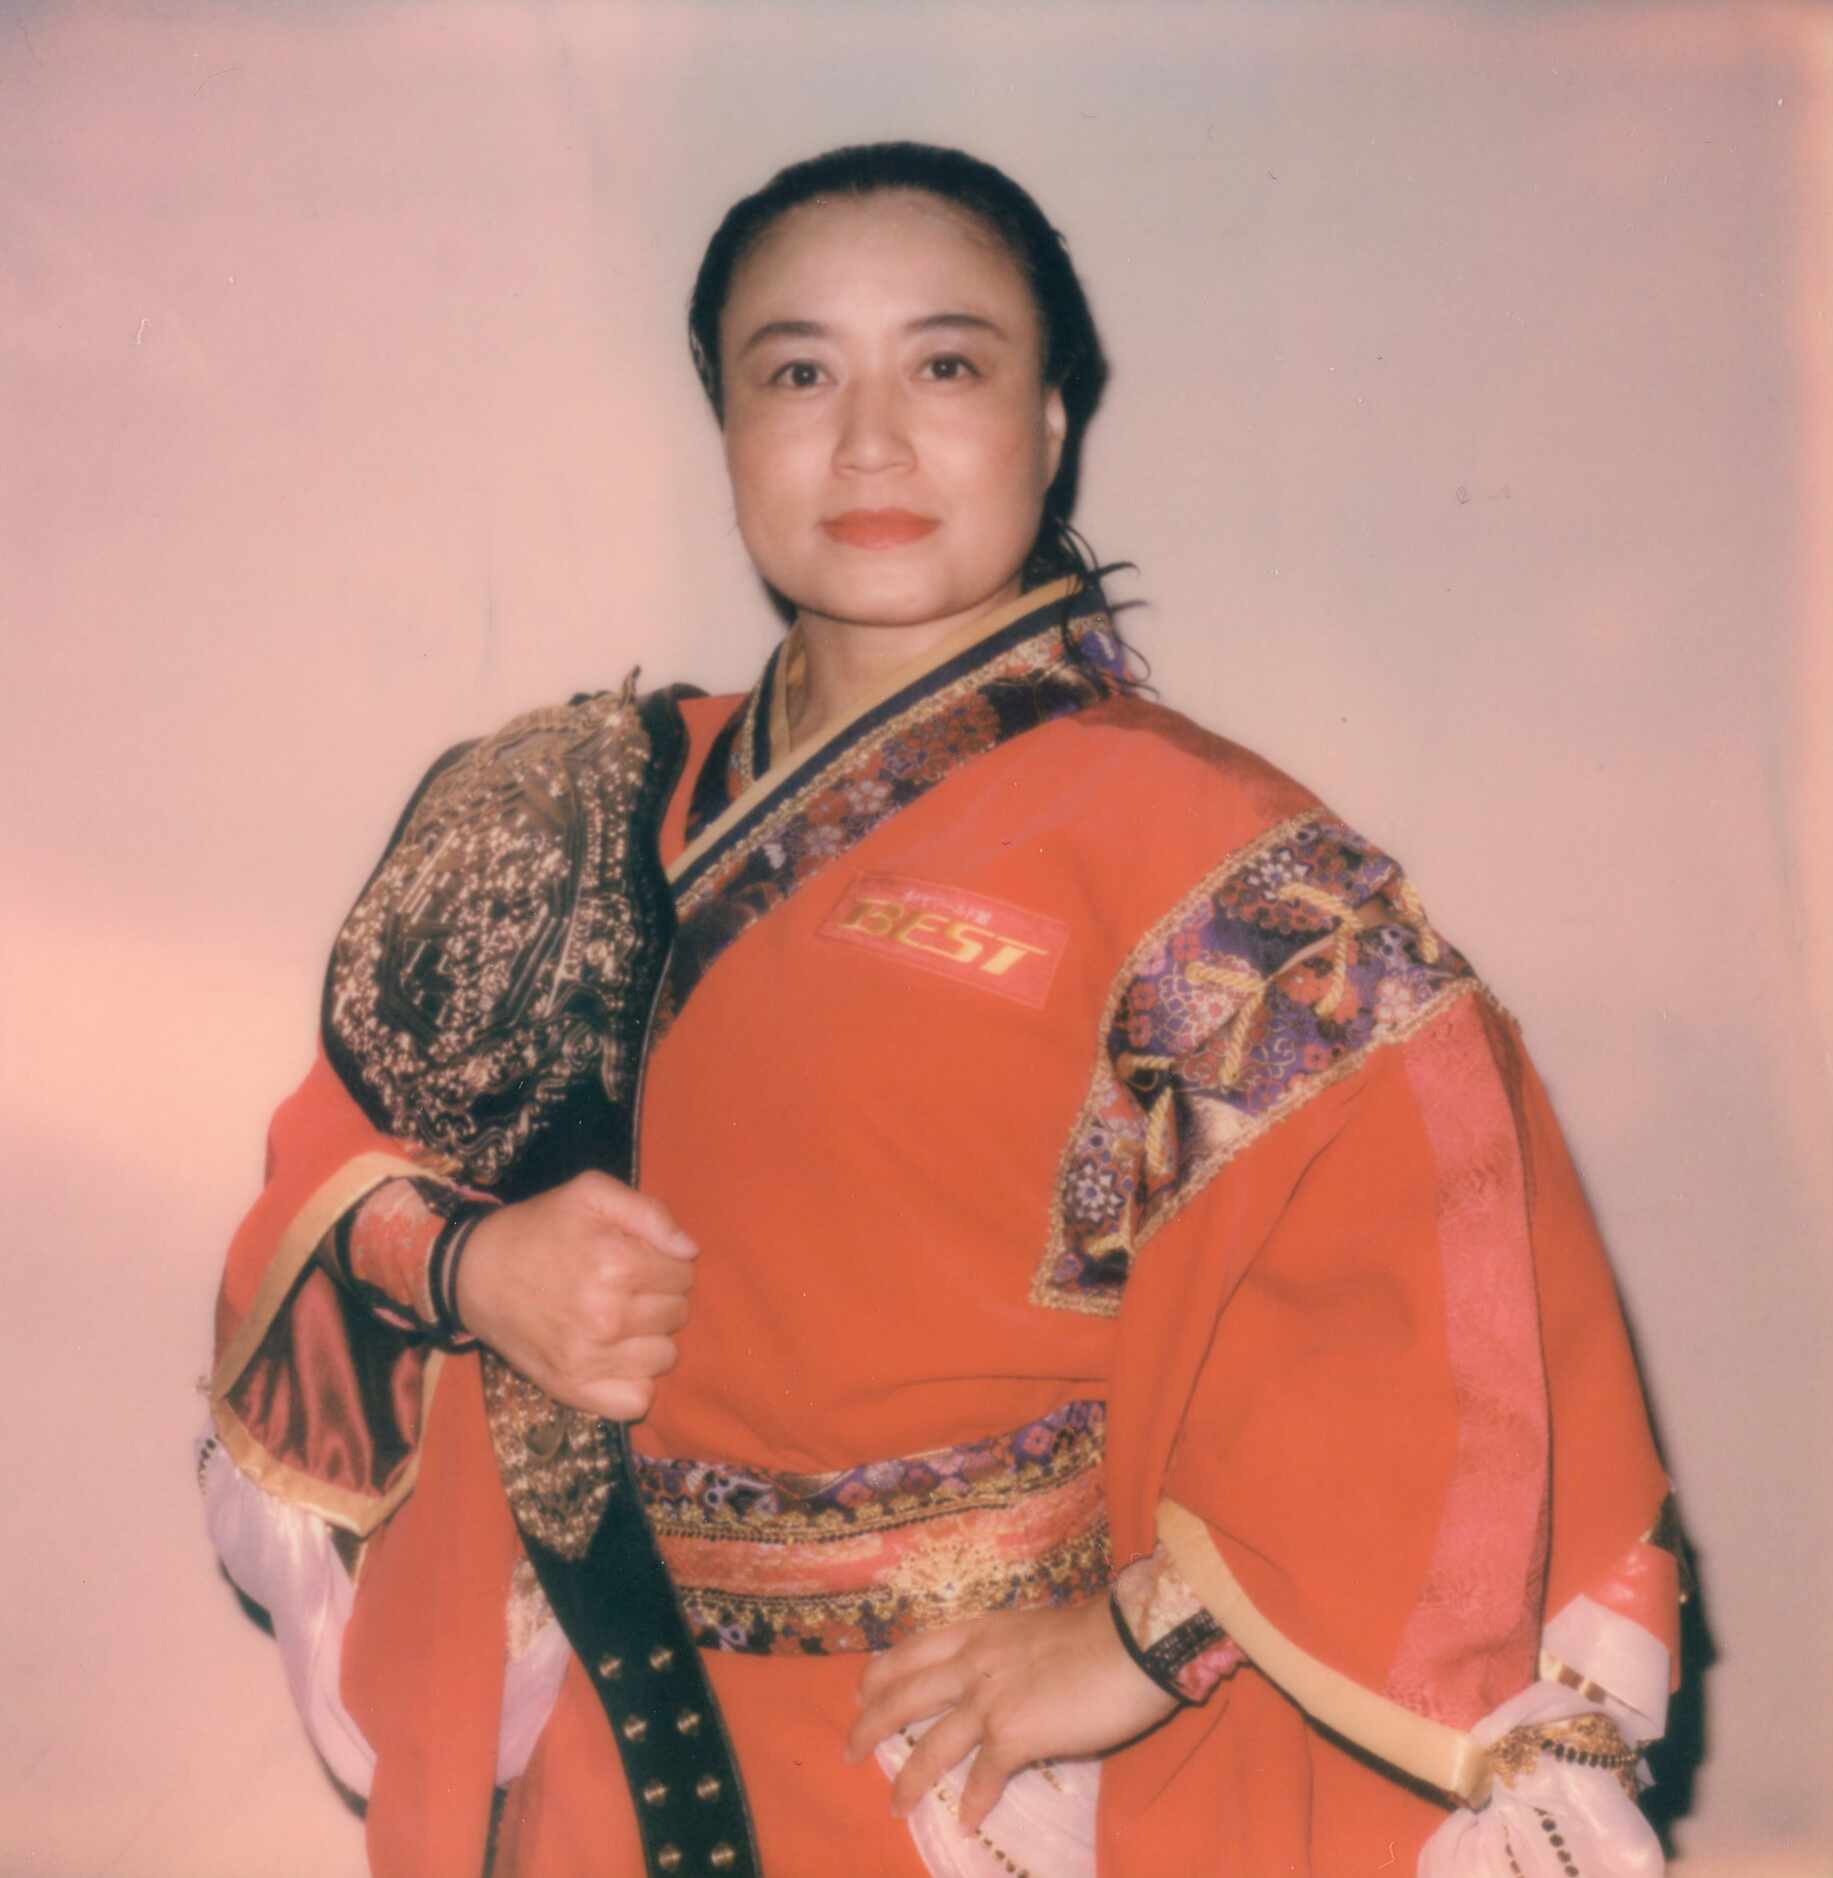 Professional wrestler Meiko Satomura poses for a portrait by Michael Watson. The portrait...